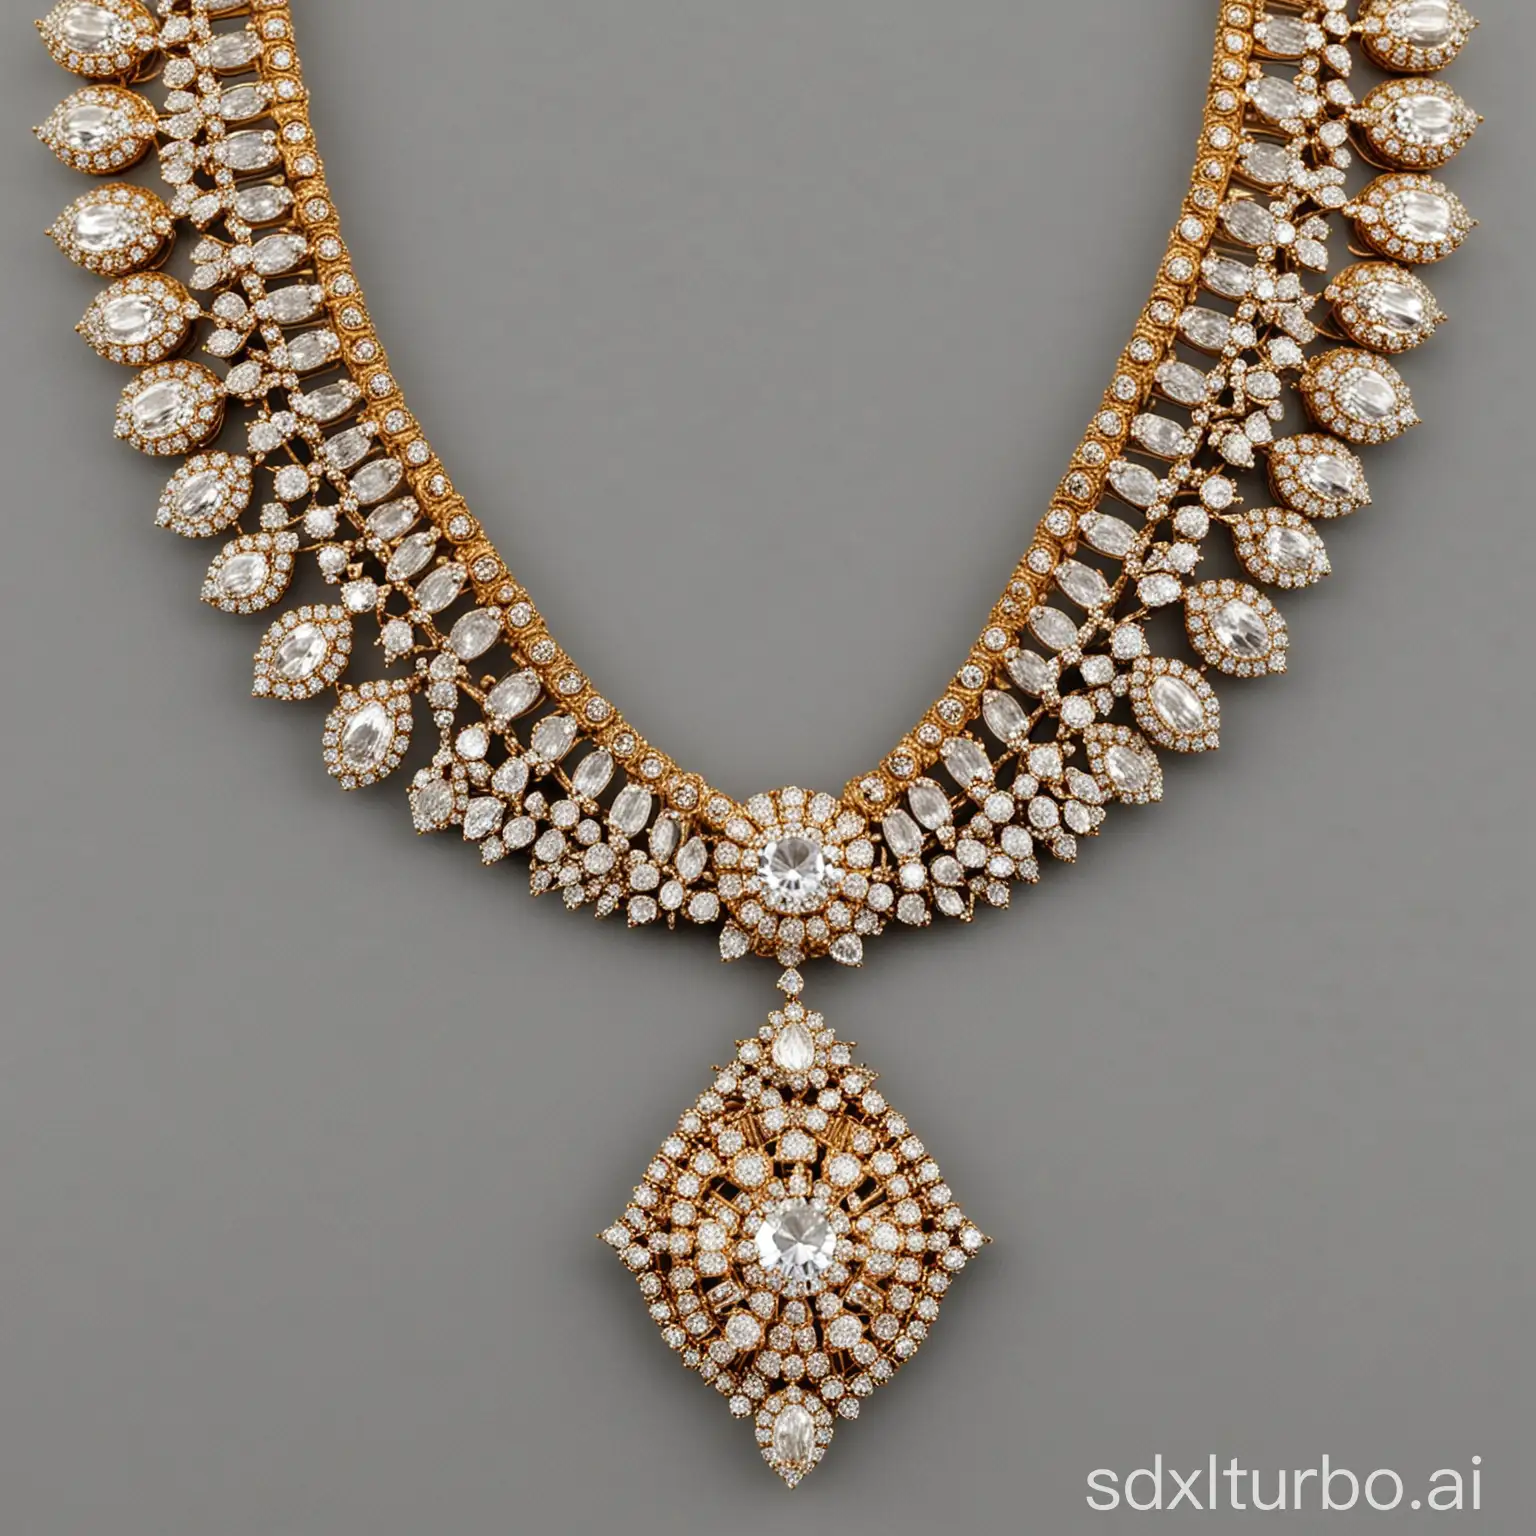 Extravagant-Napoleon-Necklace-Opulent-Jewel-Adorning-Nobility